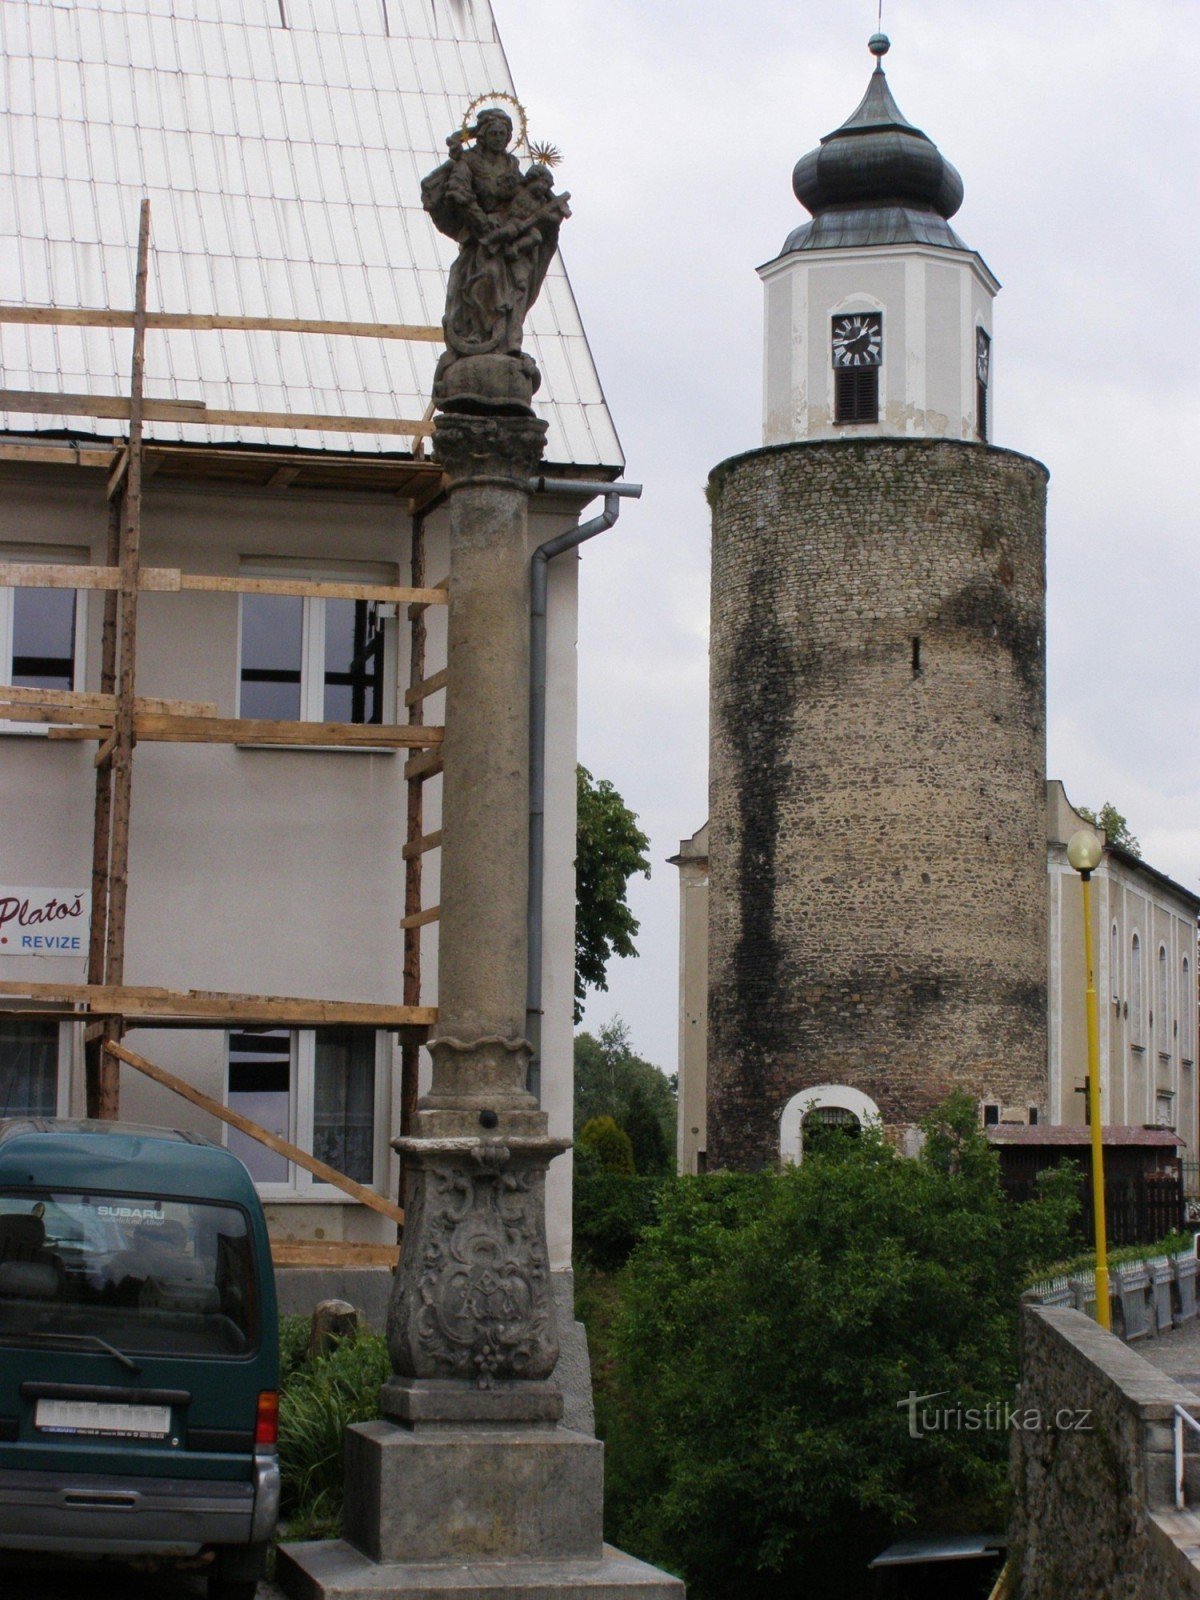 Žulová - μια στήλη με ένα άγαλμα της Παναγίας